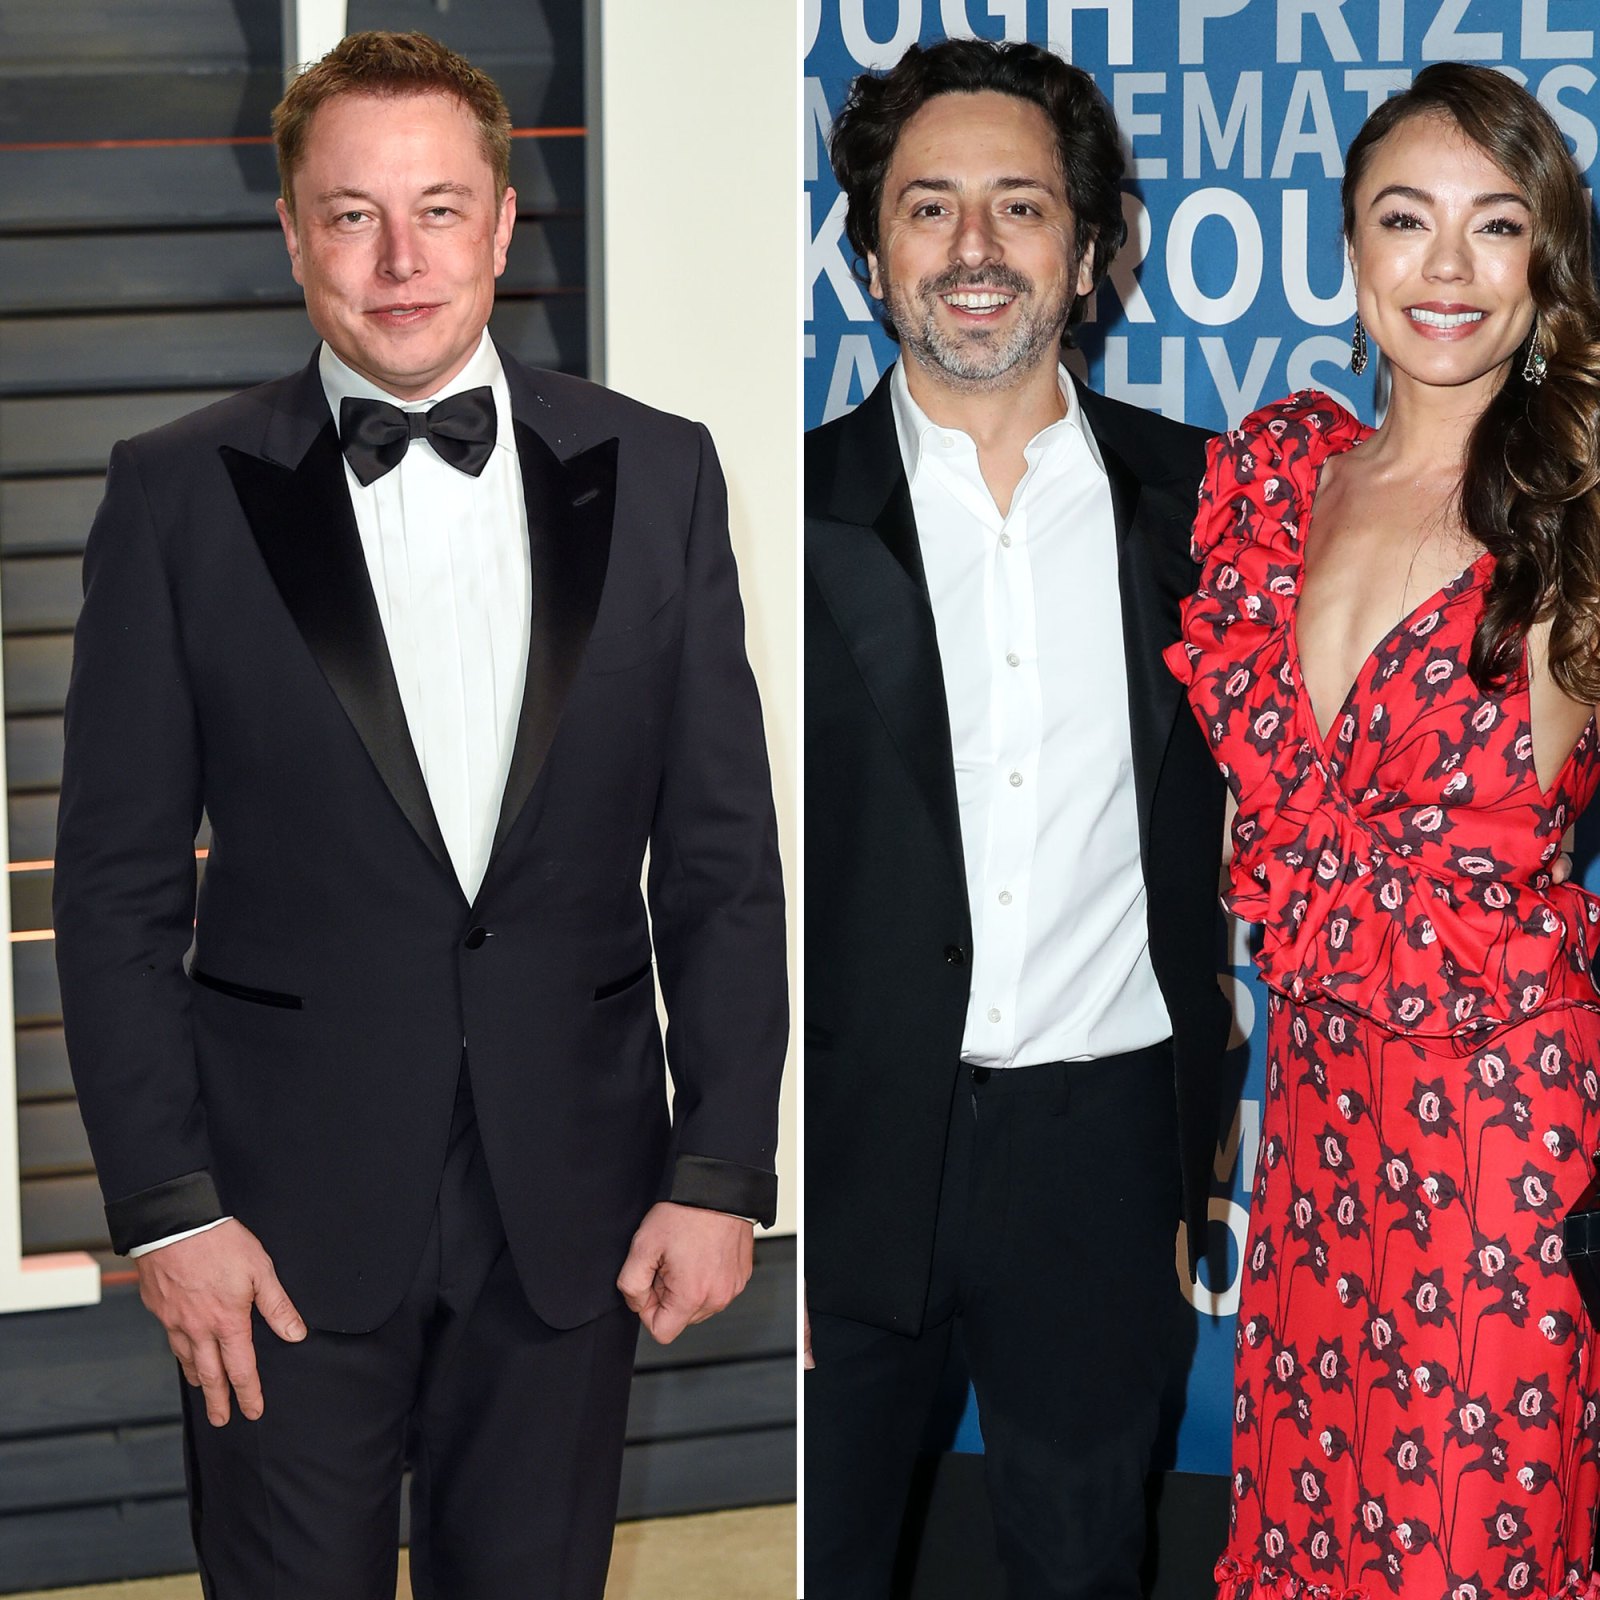 Elon Musk Denies Affair With Google Cofounder Sergey Brins Wife Nicole Shanahan